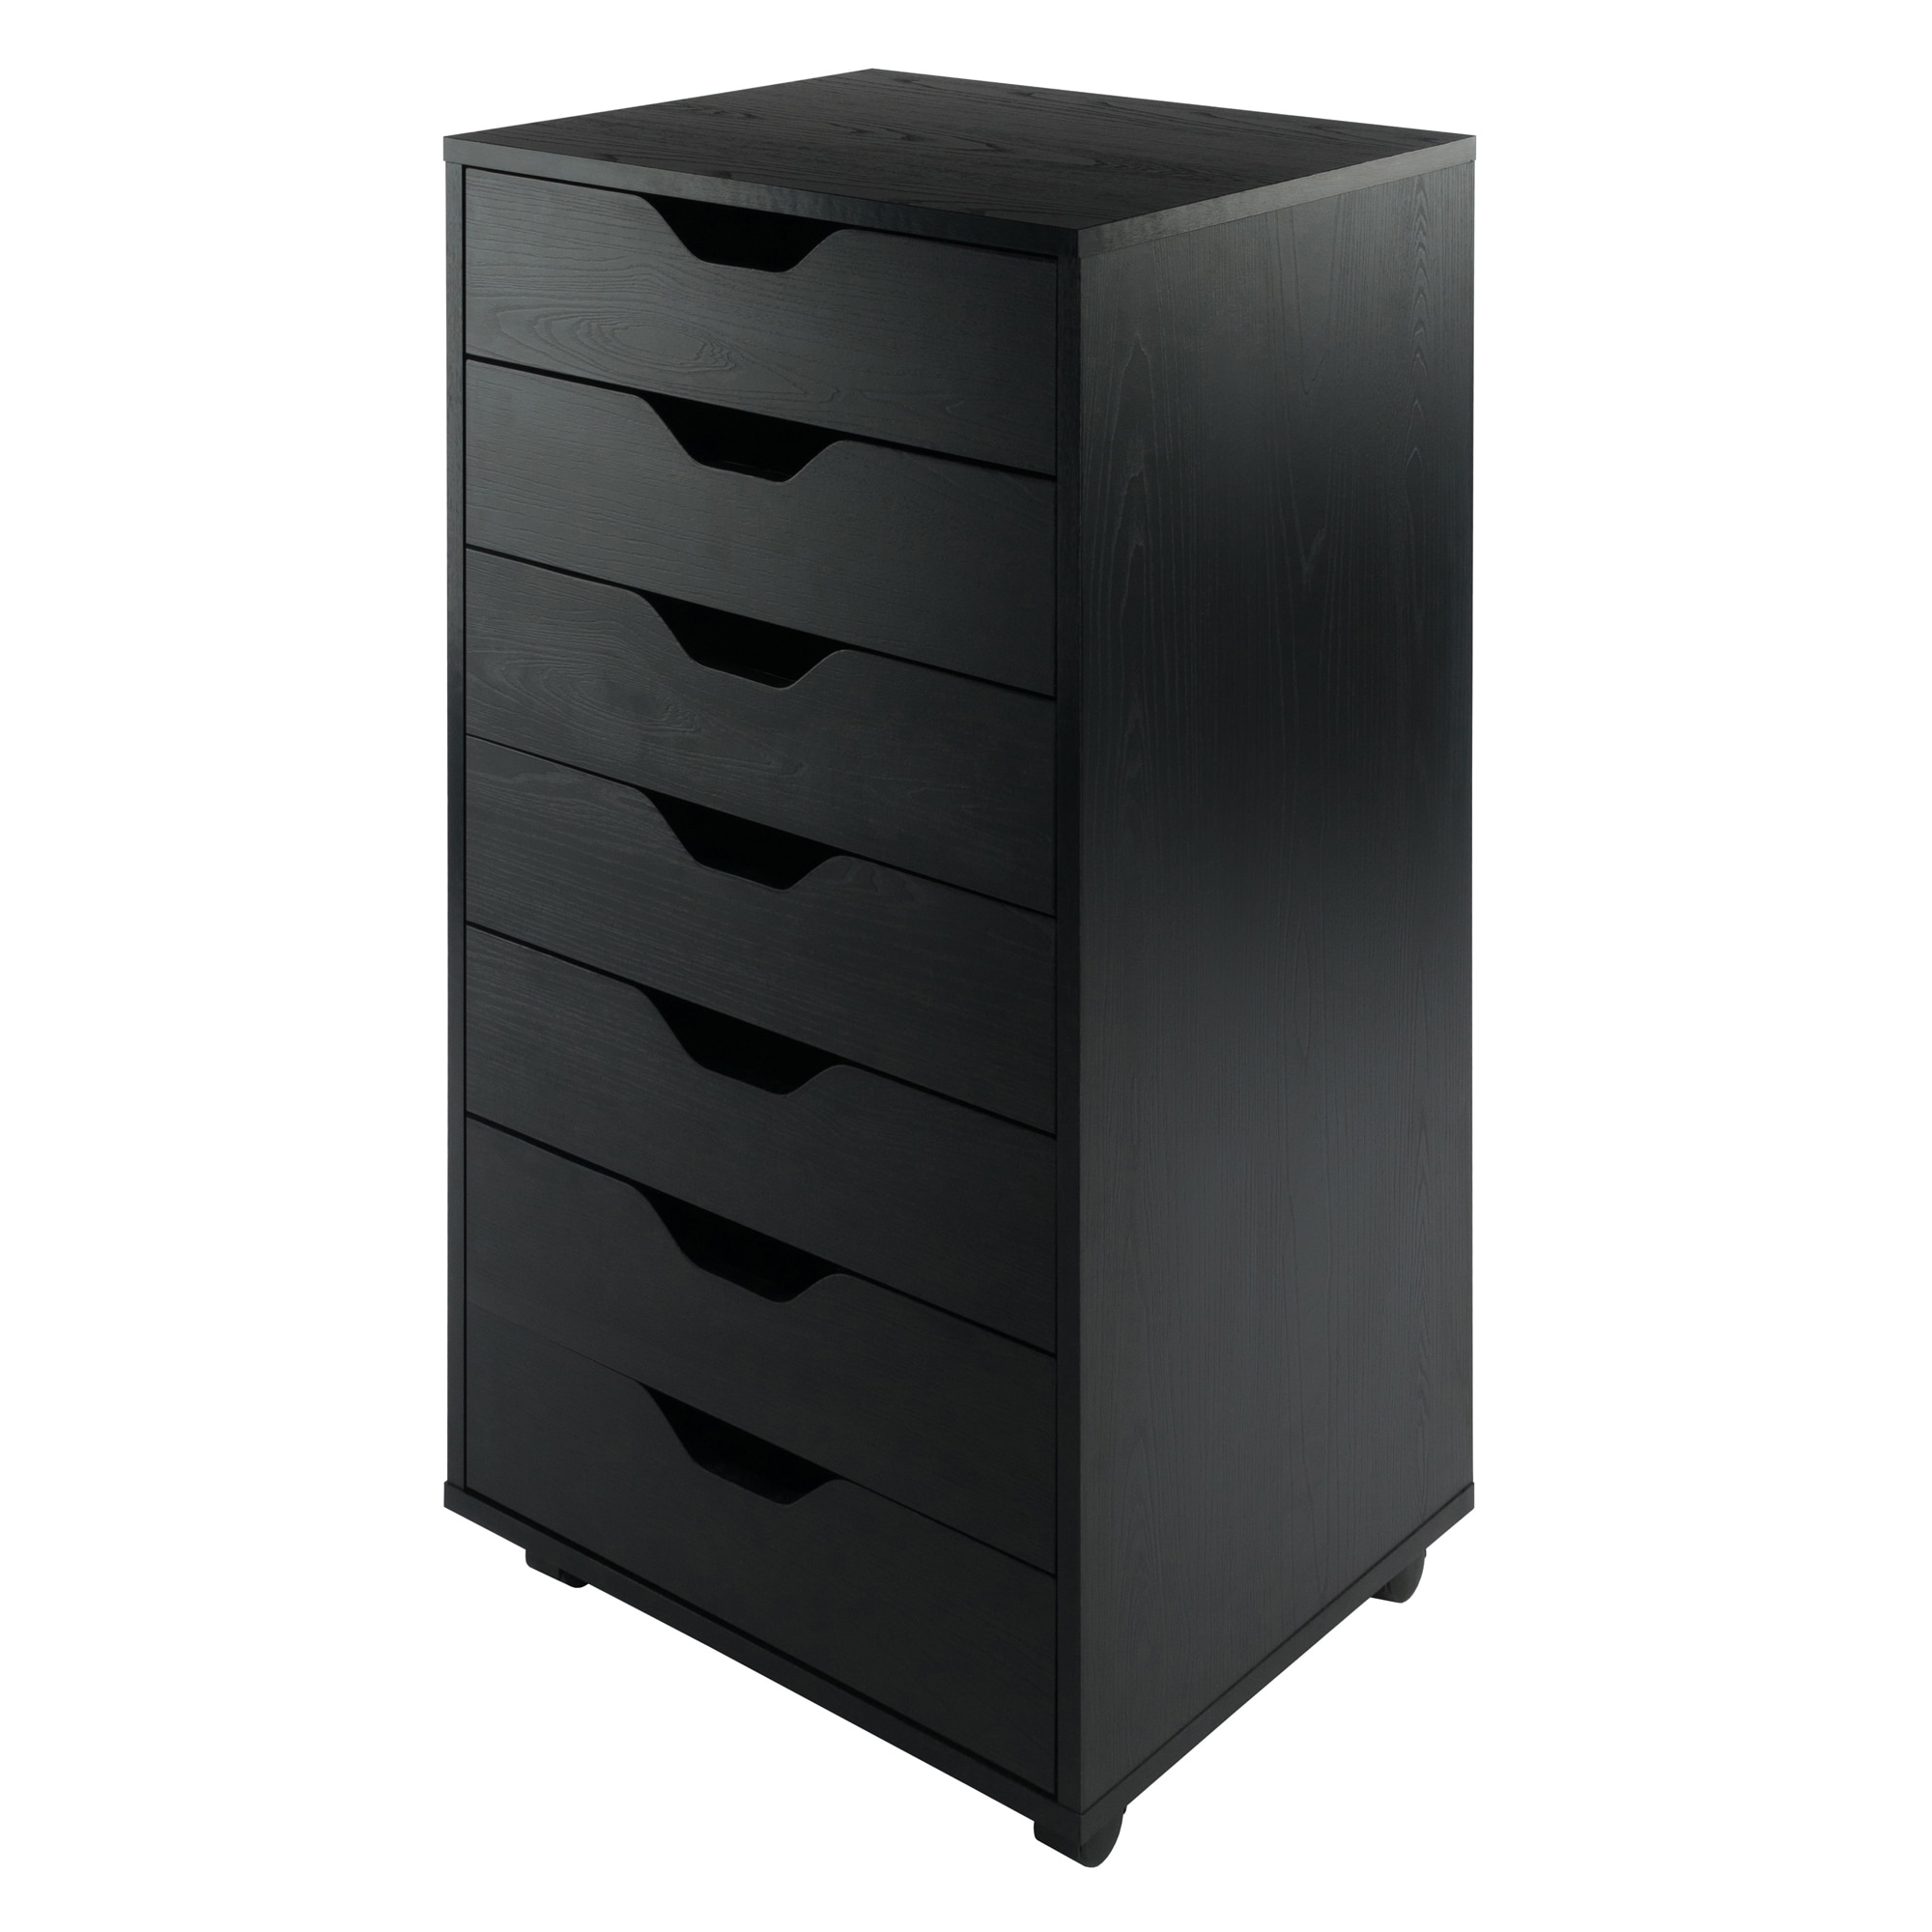 Color : A Gray Office Desktop File Storage Cabinet Storage Home Office Furniture Black File Cabinets Drawer Mobile Multi-Function Cabinet 5 Drawers Color 